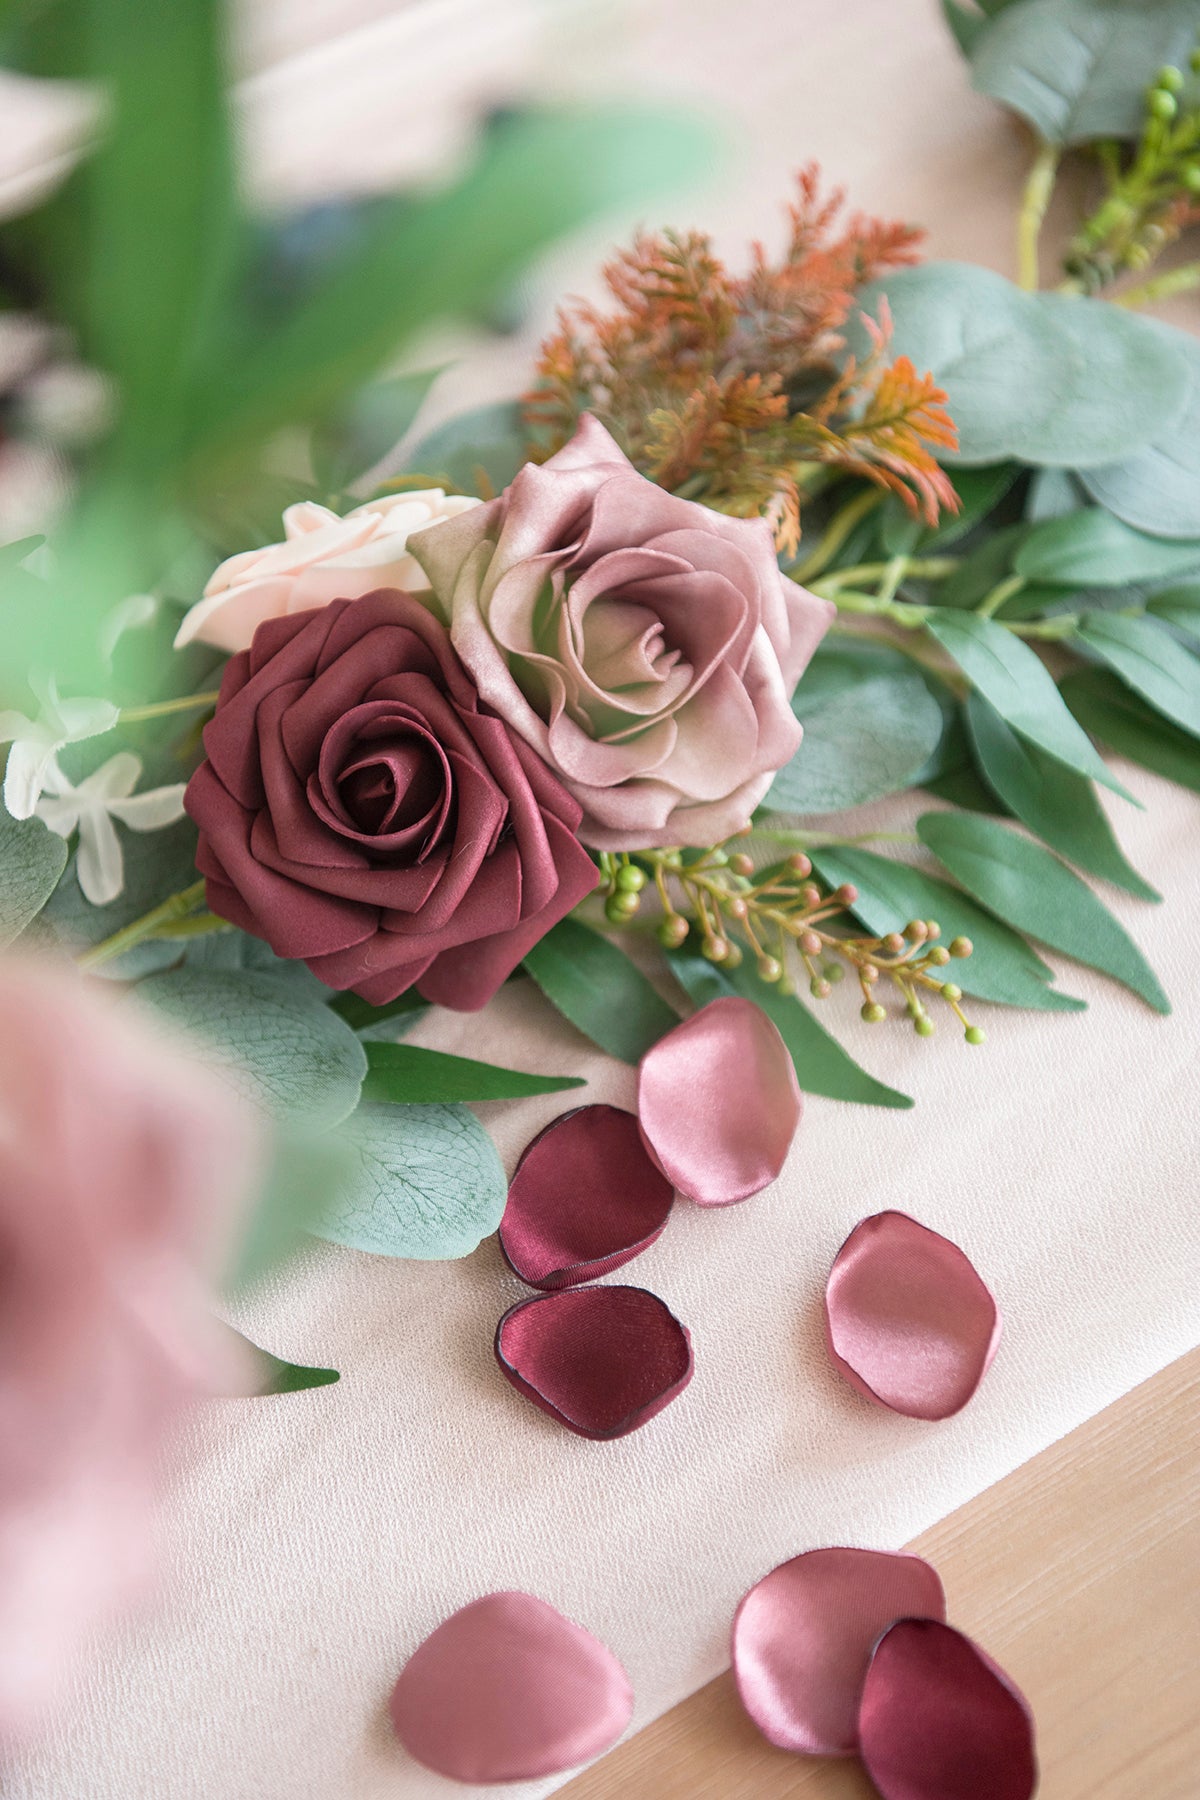 Willstar 3000 pieces Romantic Silk Rose Petals for Wedding